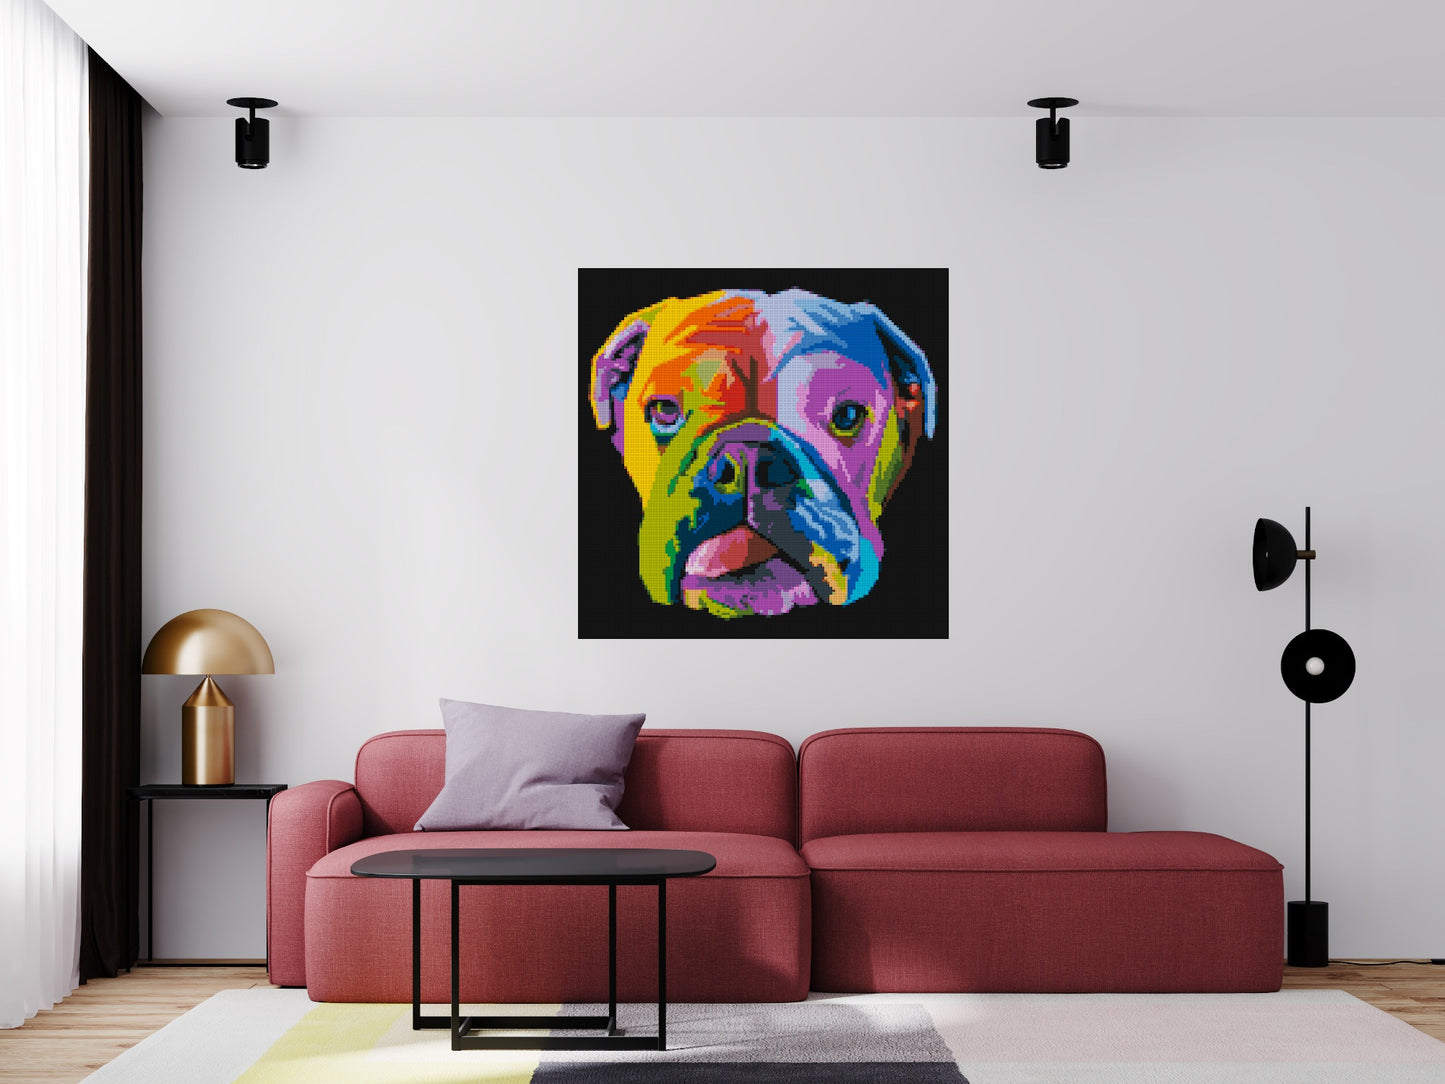 English Bulldog Colourful Pop Art - Brick Art Mosaic Kit